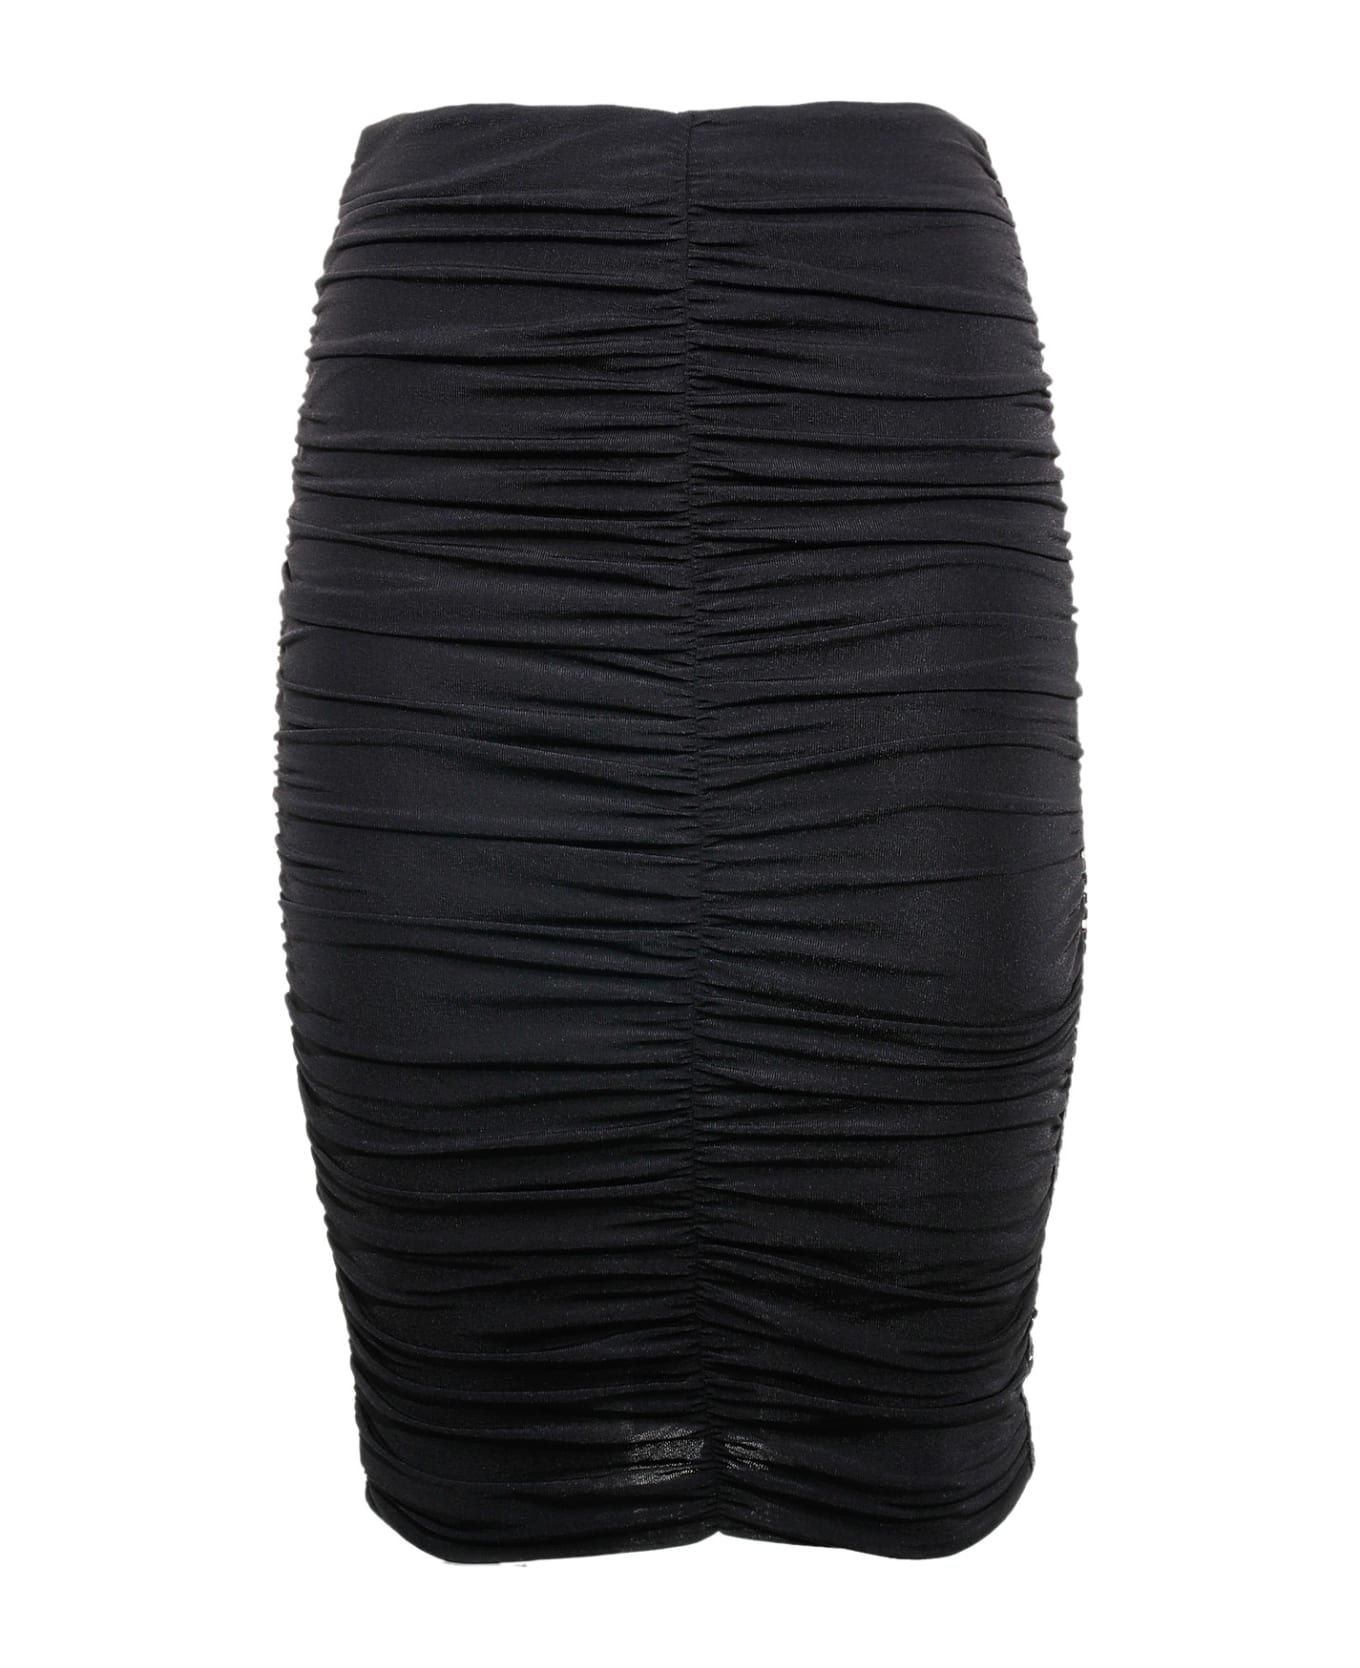 Givenchy Gathered Skirt - BLACK